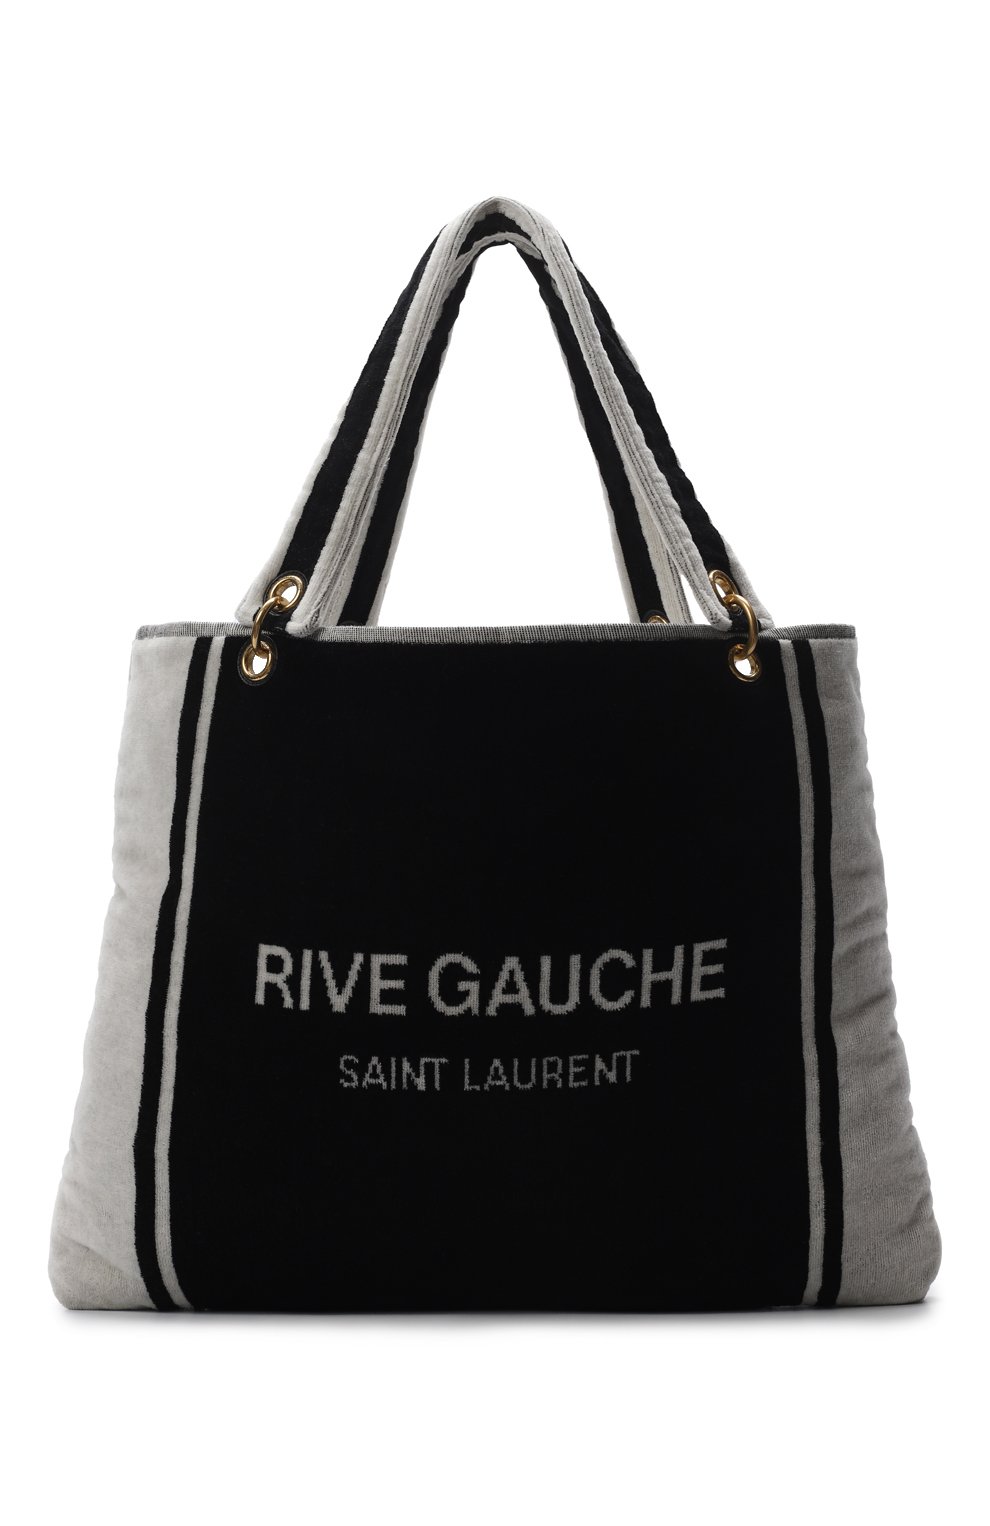 Сумка Rive Gauche Towel | Saint Laurent | Чёрно-белый - 1